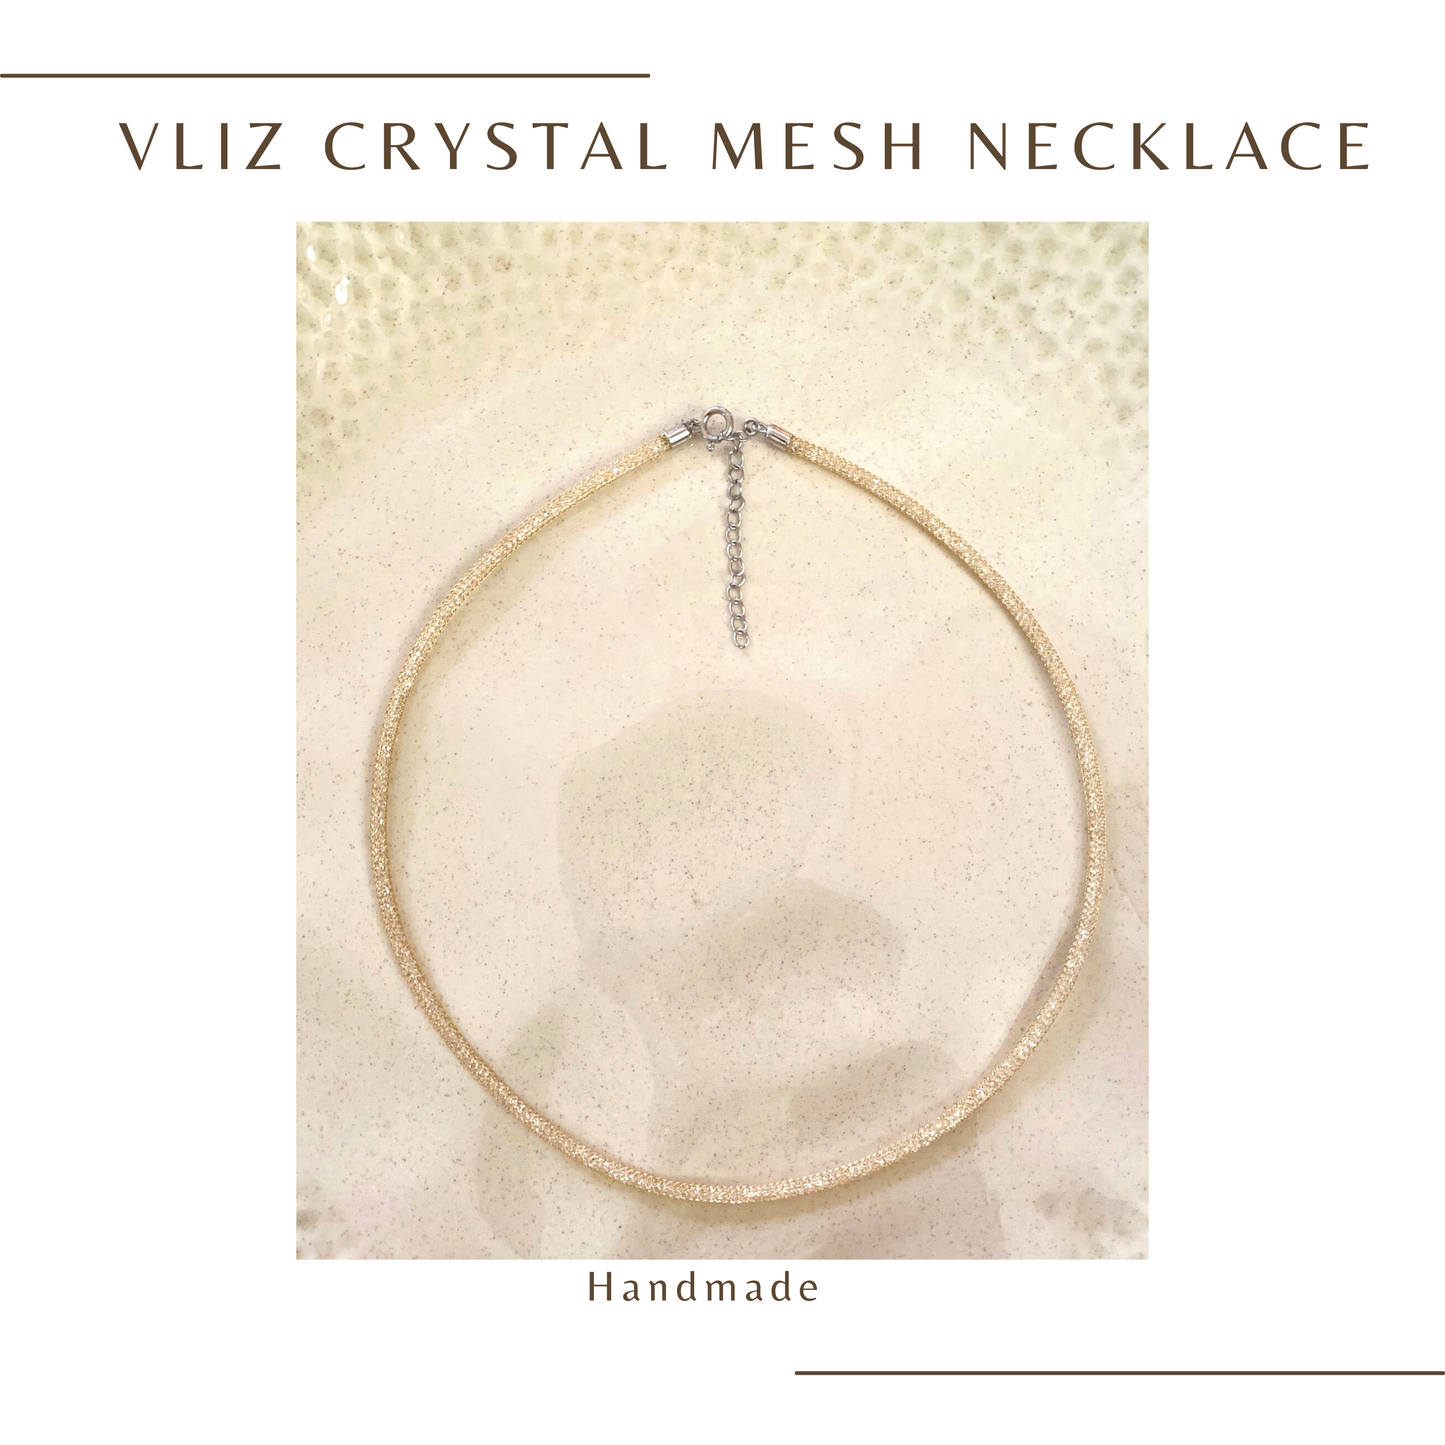 Vliz Crystal Mesh Necklace